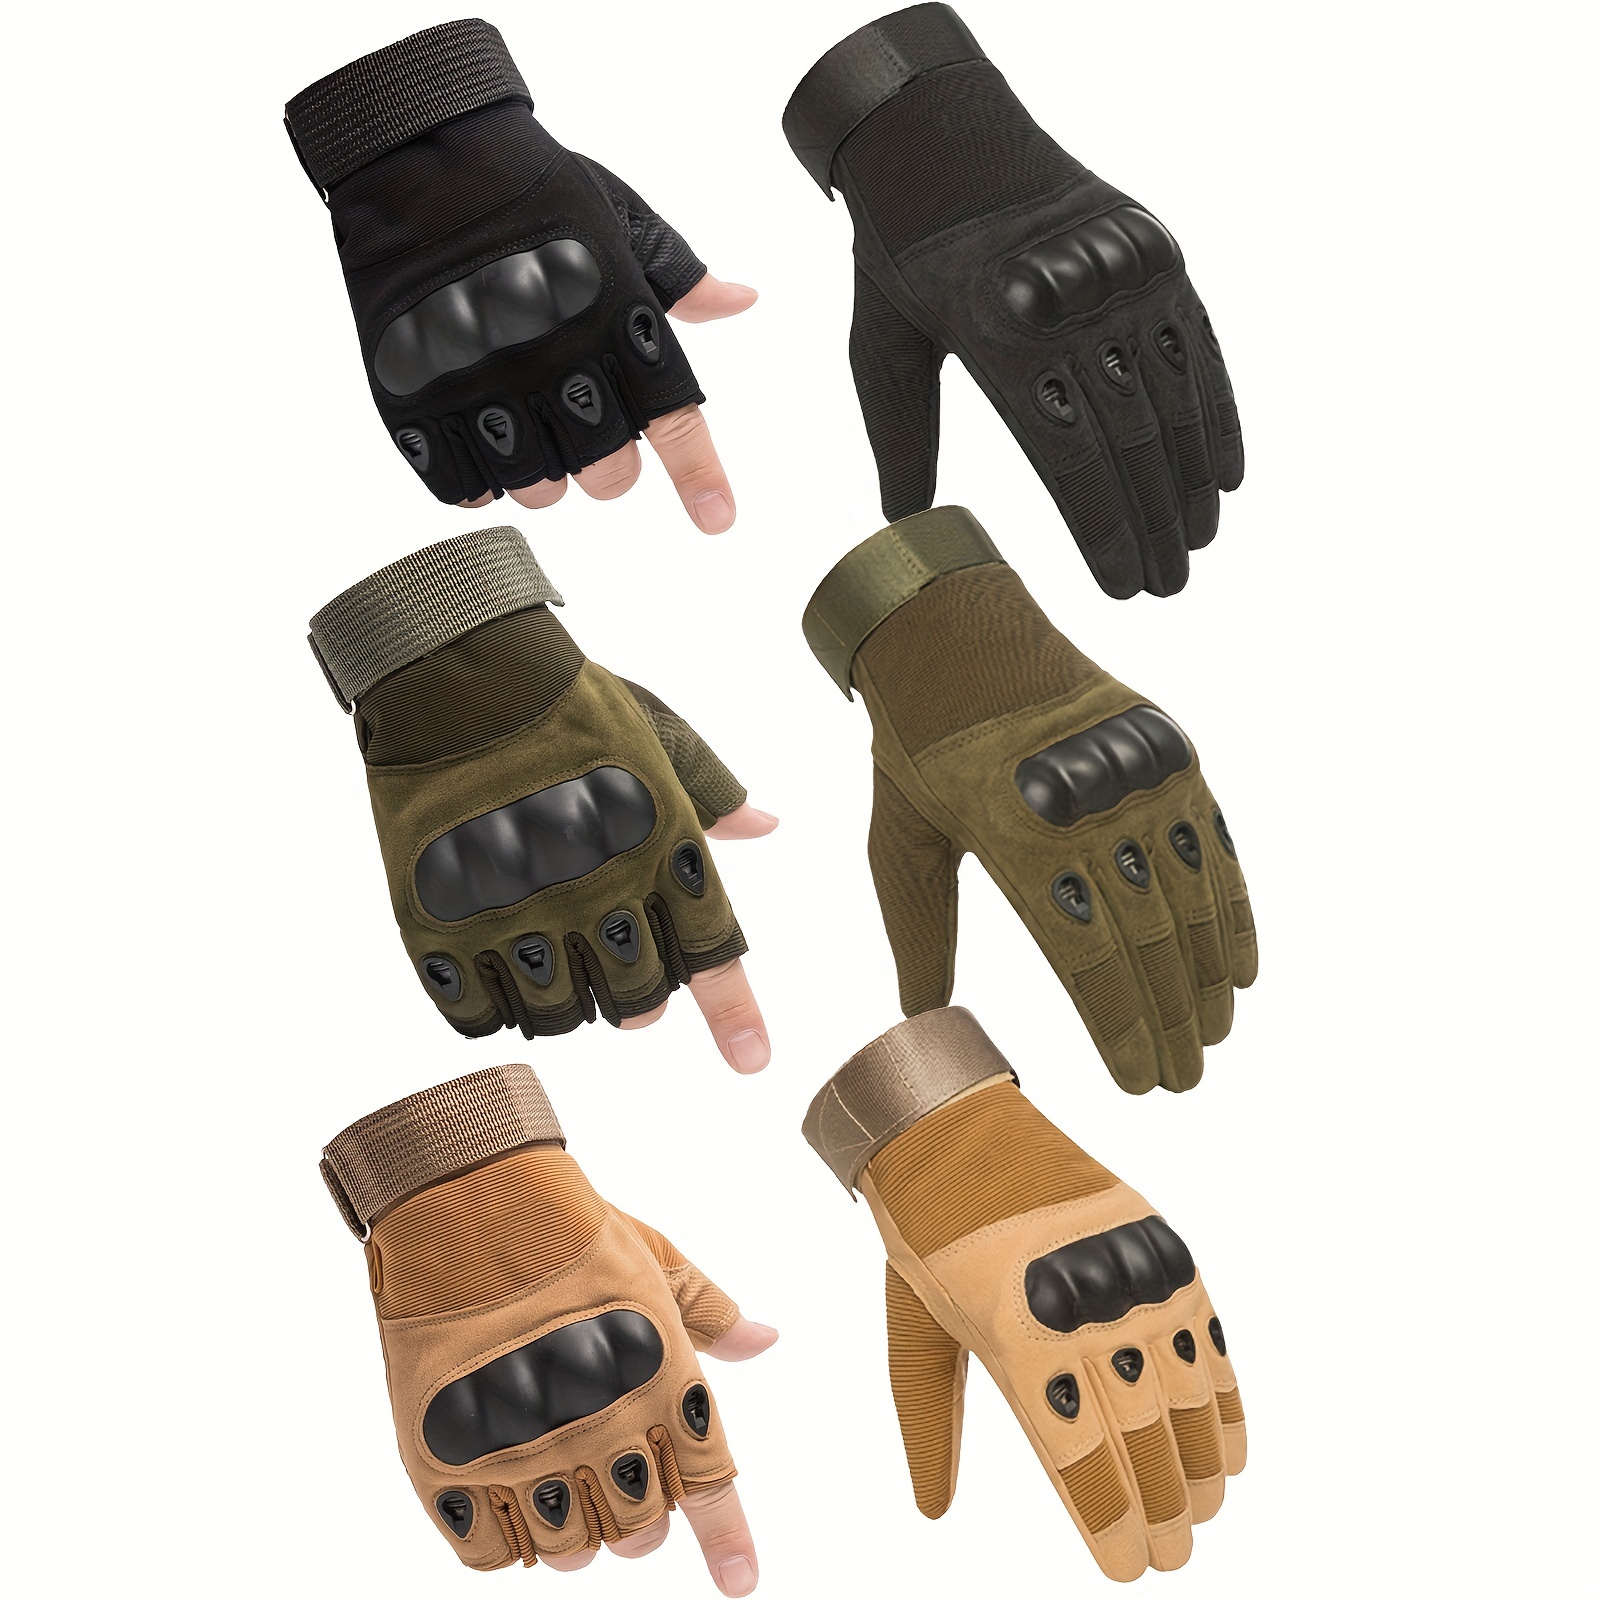 Tactical Fingerless Gloves For Men - Durable Rubber Knuckle